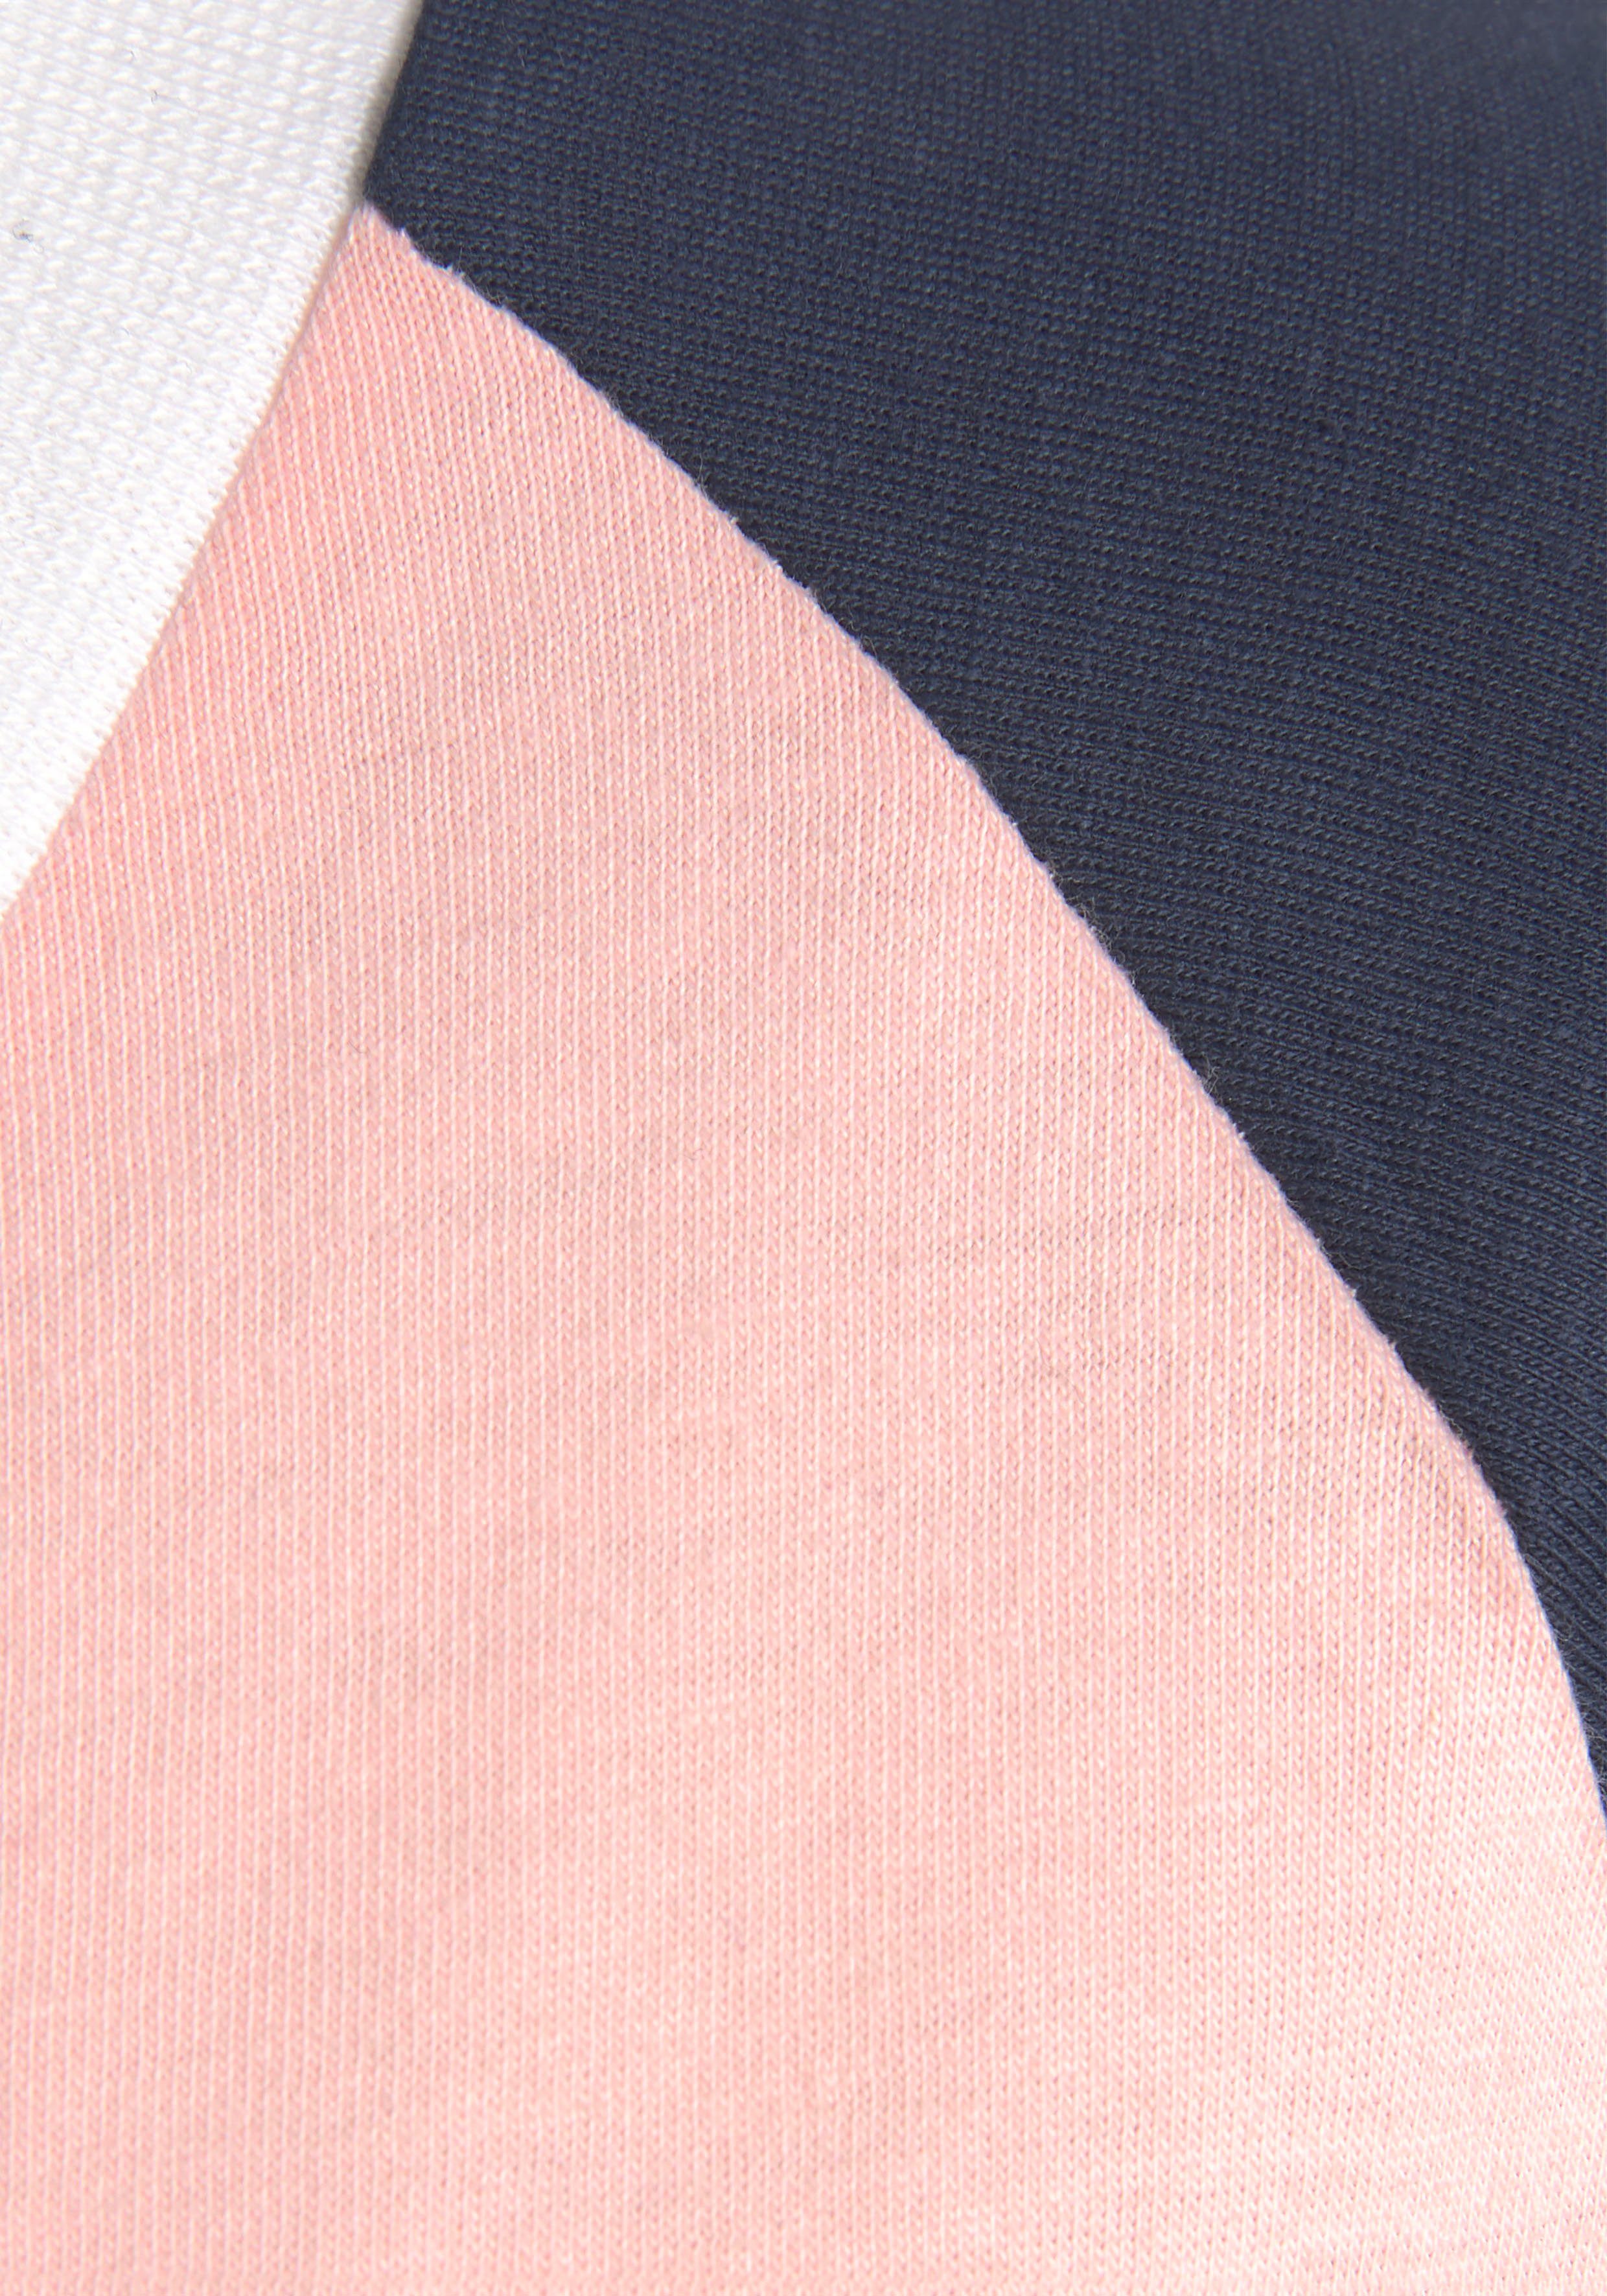 kontrastfarbenen rosa-dunkelblau mit Pyjama tlg., (2 1 Stück) KangaROOS Raglanärmeln